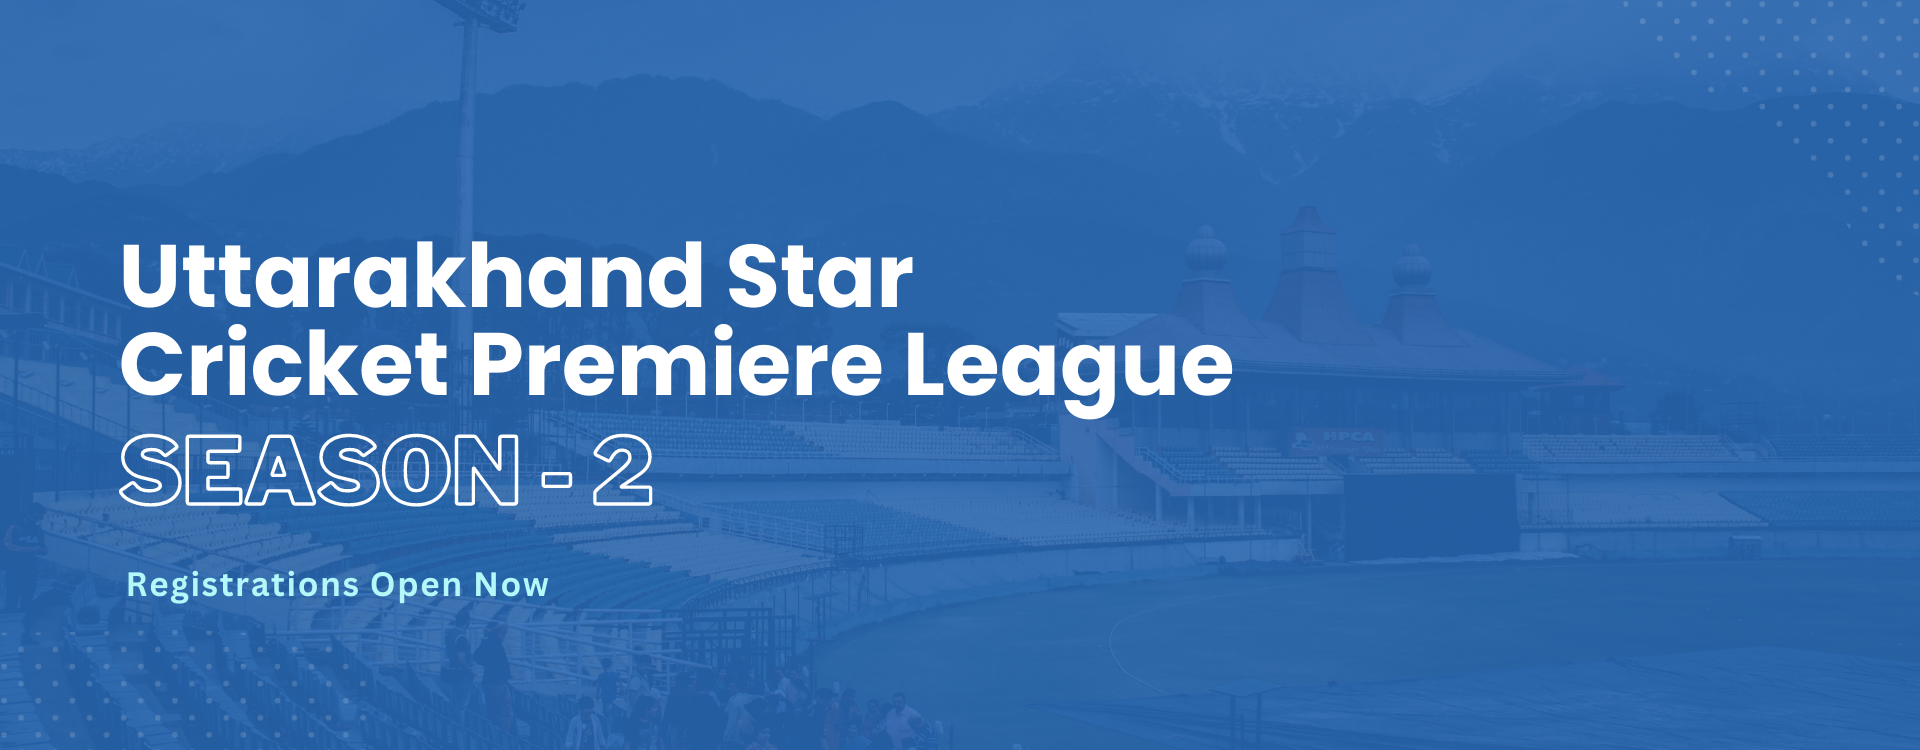 Uttarakhand Star Cricket Premiere League - Season 2